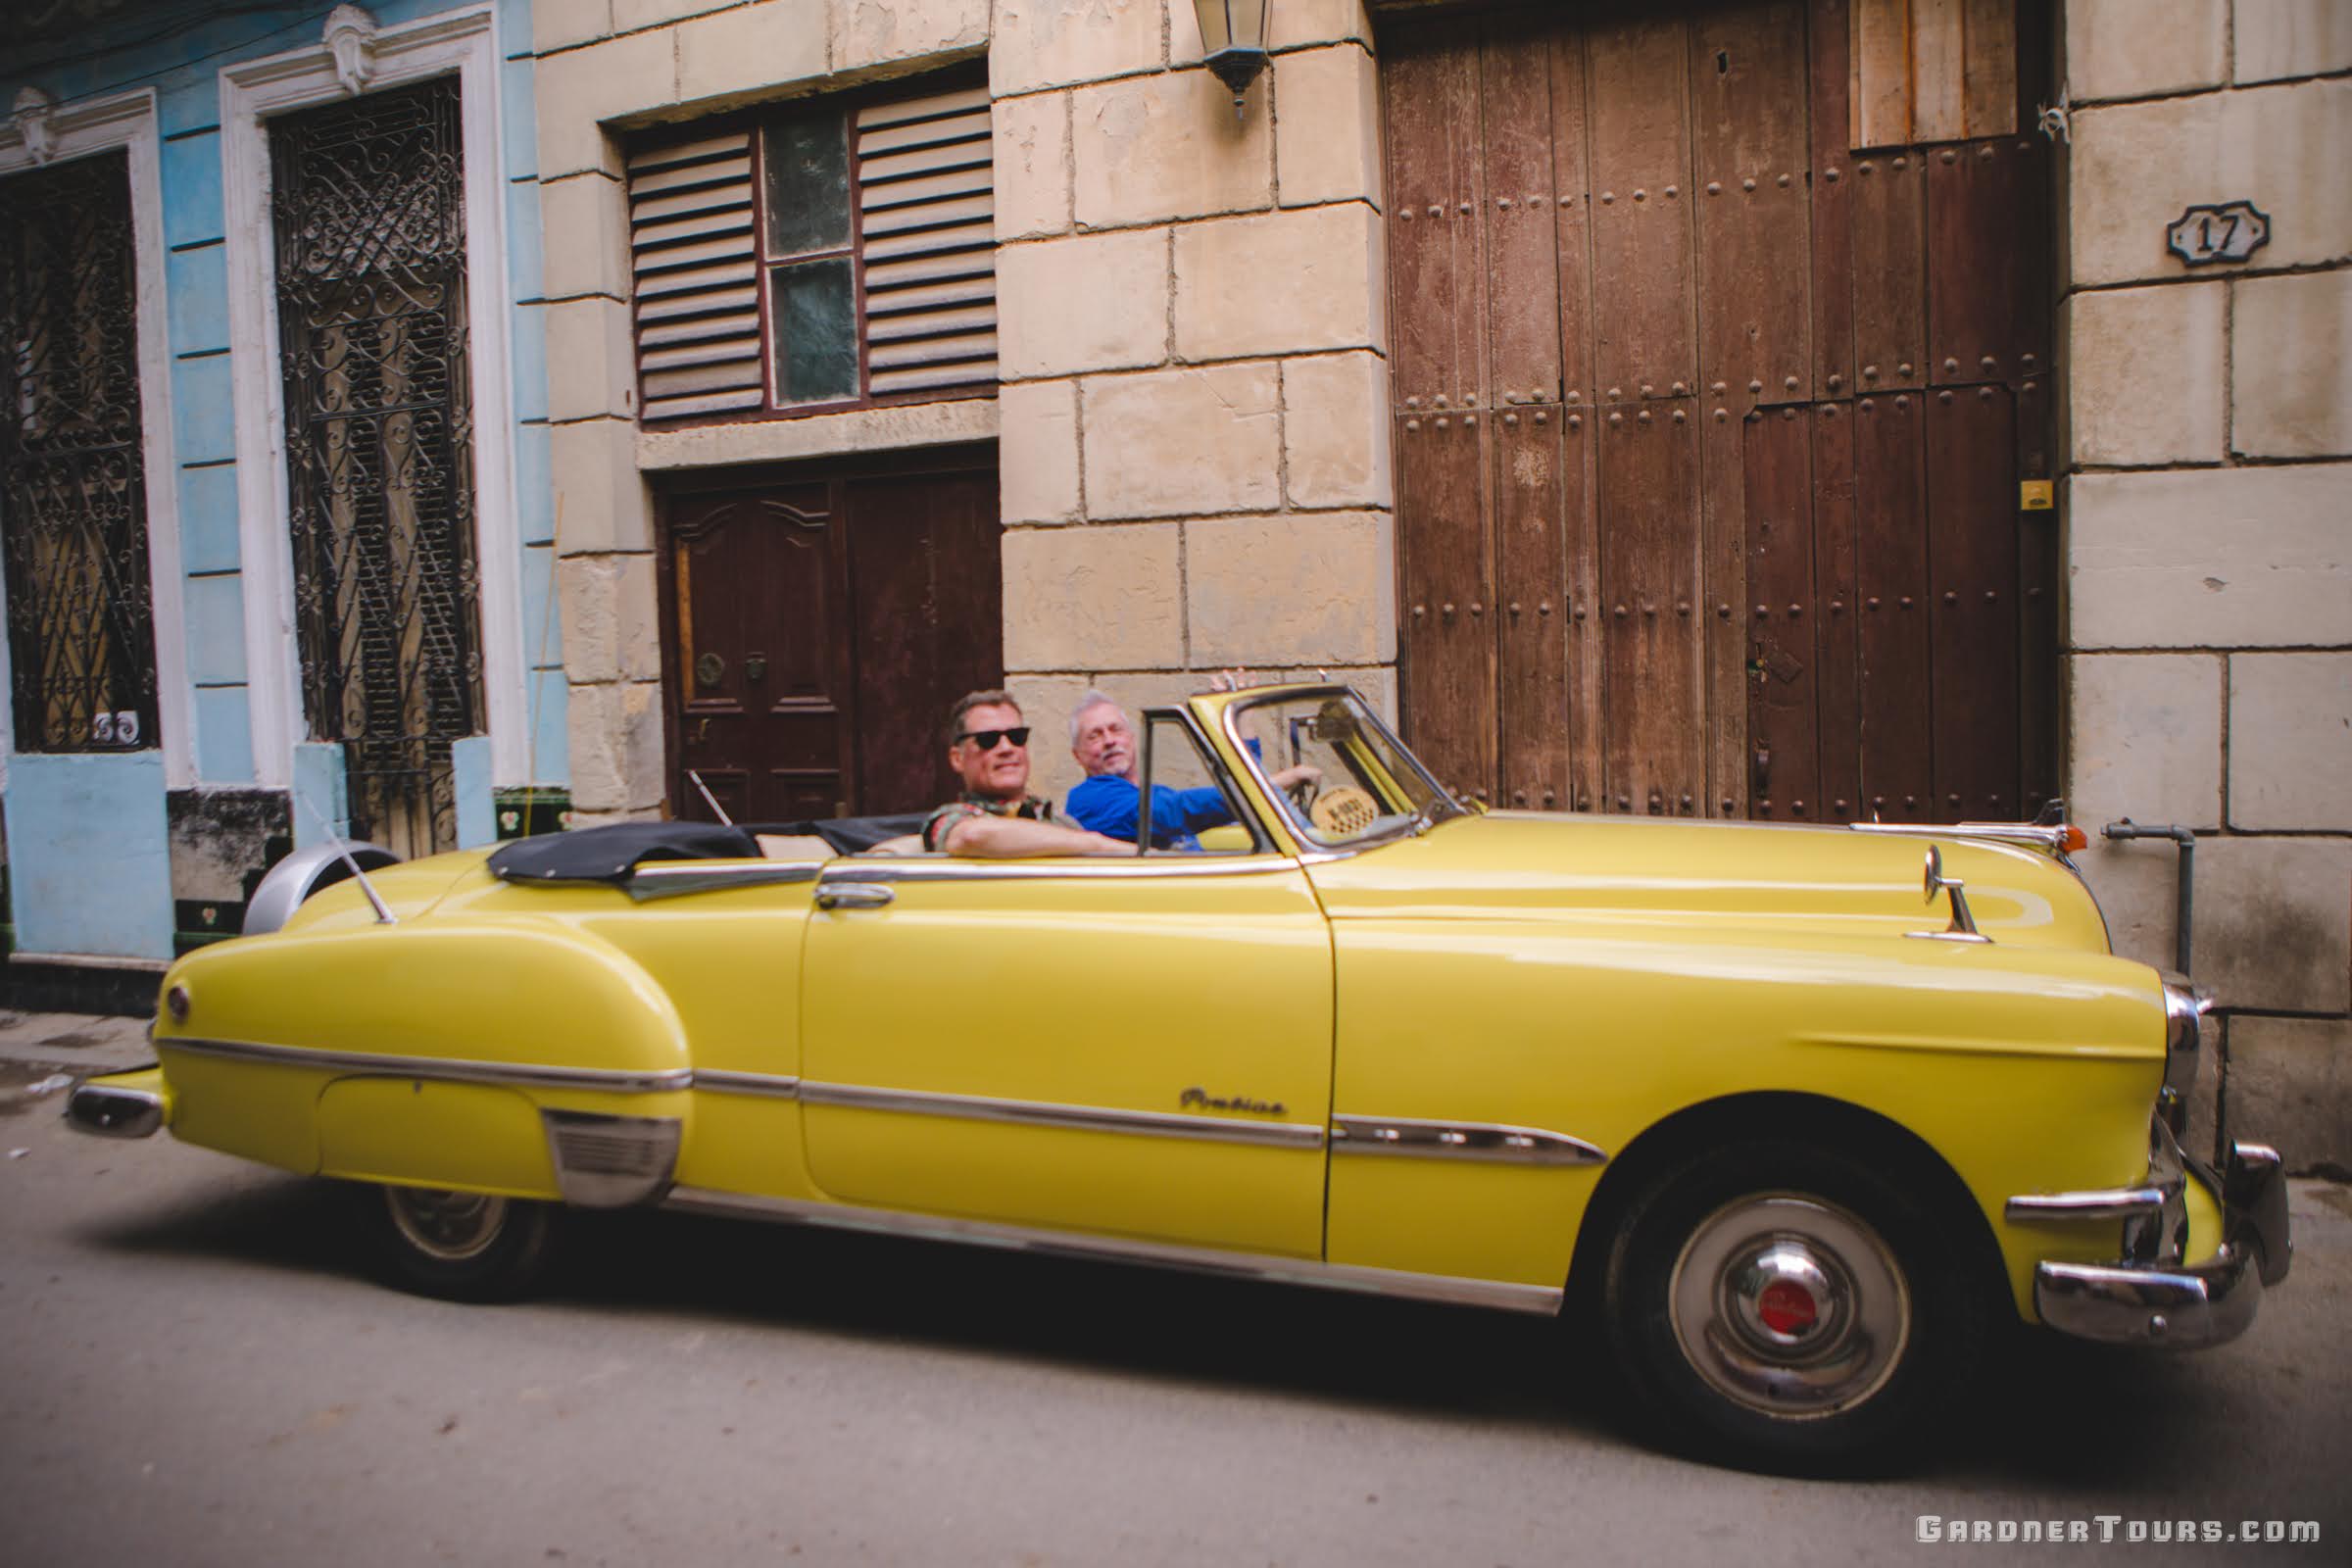 Two men Riding in a Yellow Classic Car (1951 Pontiac Chieftan) in Havana, Cuba